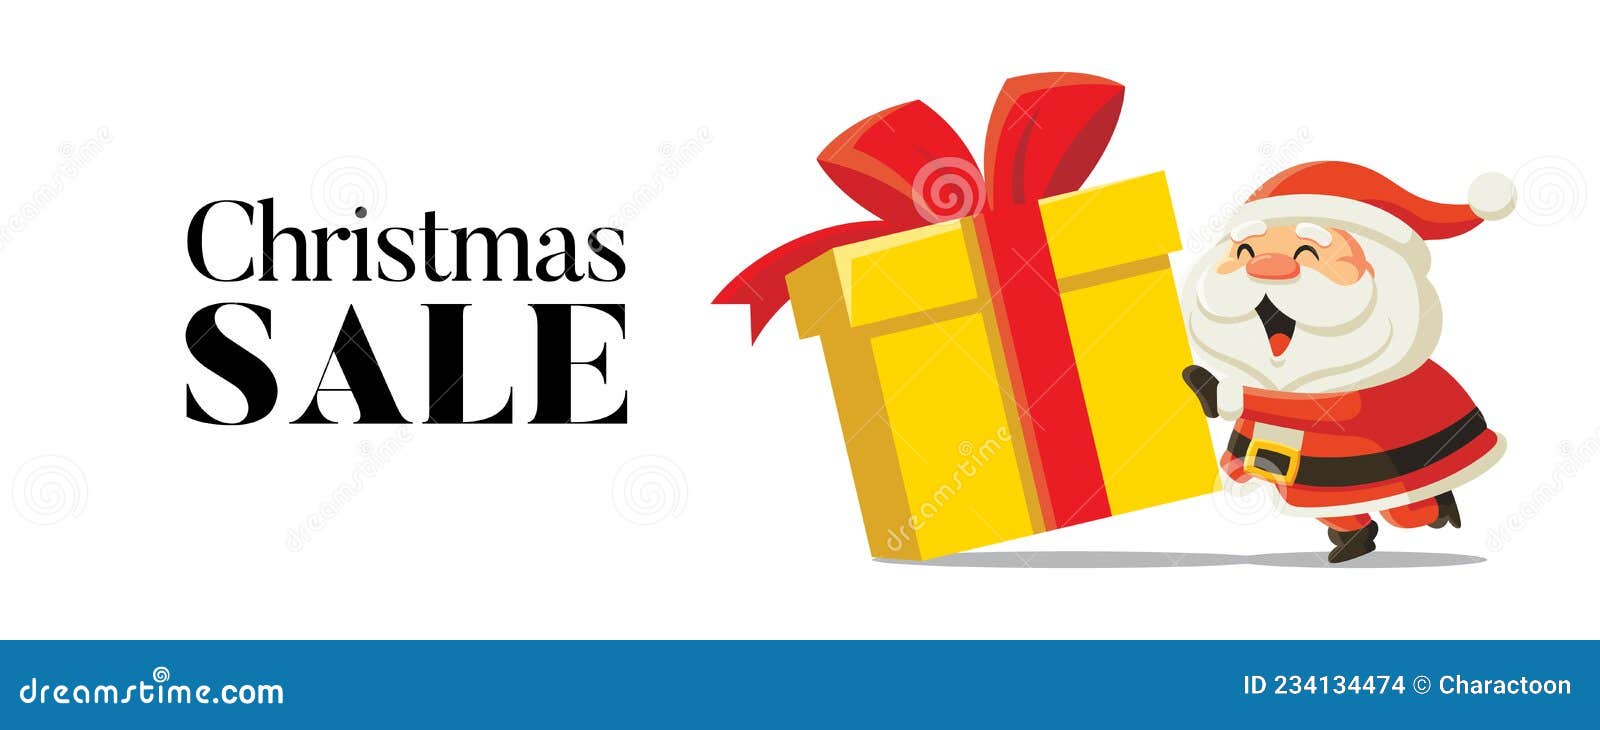 Christmas Sale Social Media Ads. Funny Cartoon Santa Claus Pushing Huge Box  of Christmas Present Stock Vector - Illustration of present, discount:  234134474